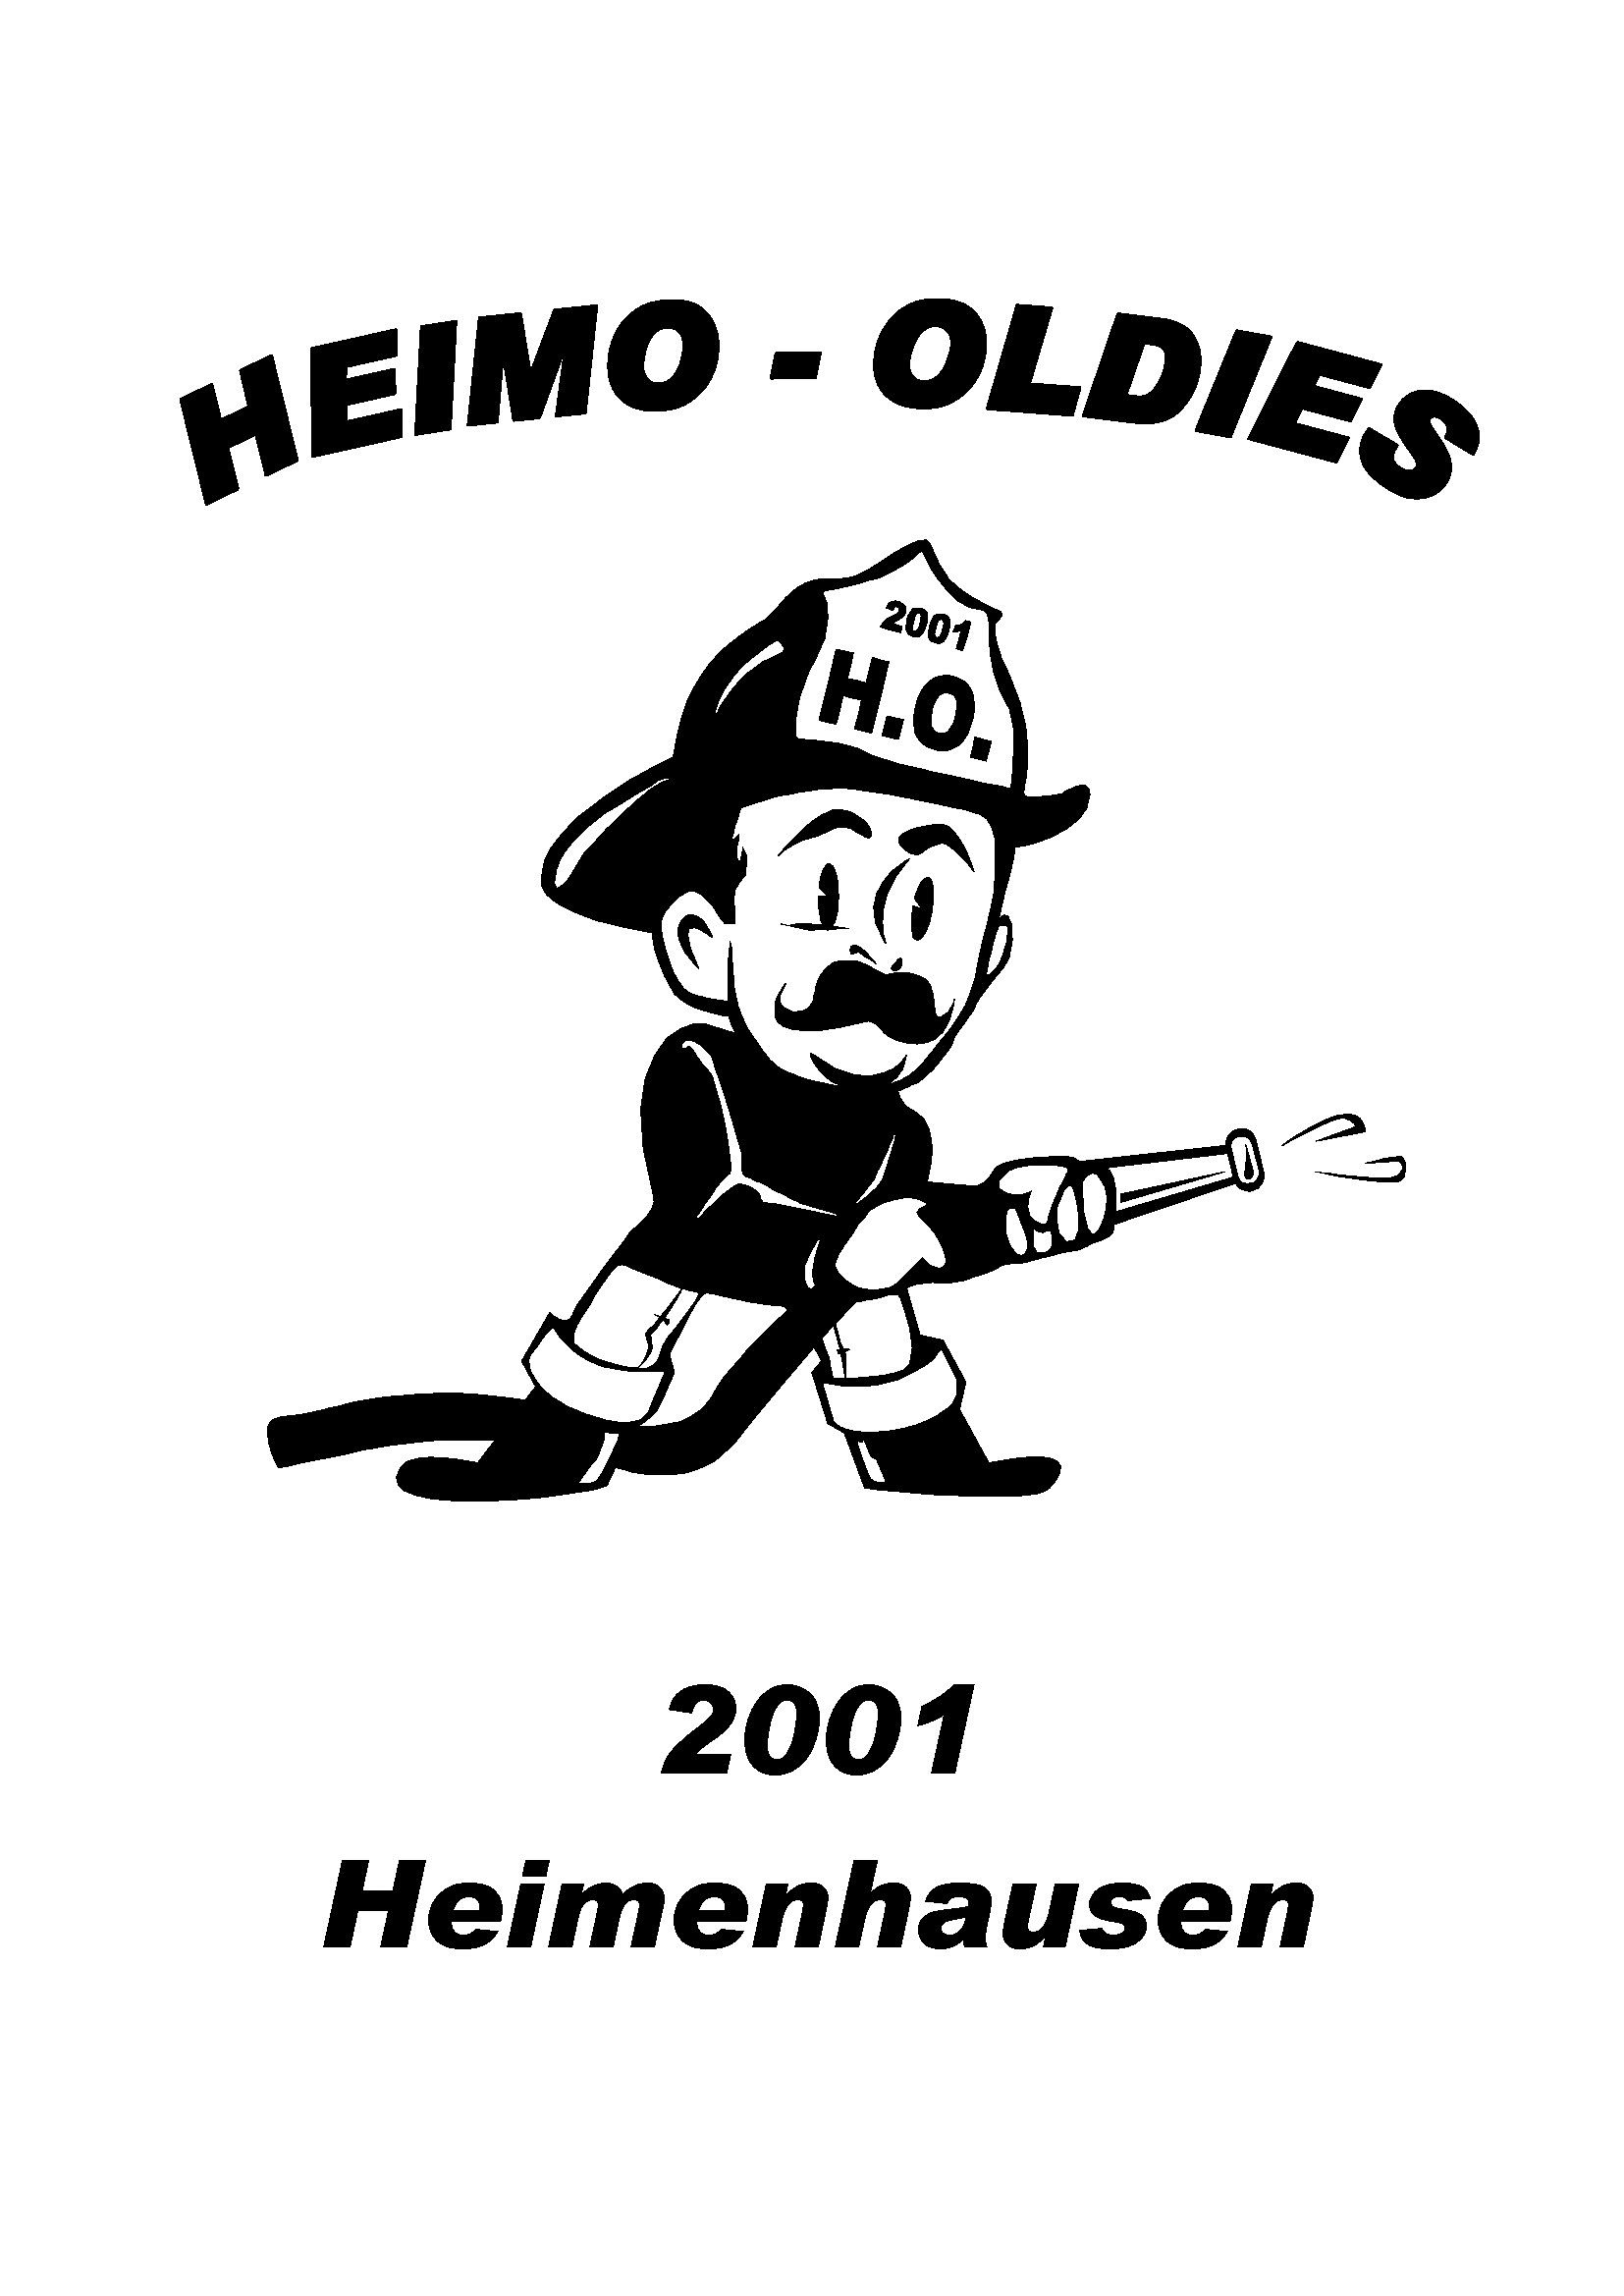 Heimo-Oldies